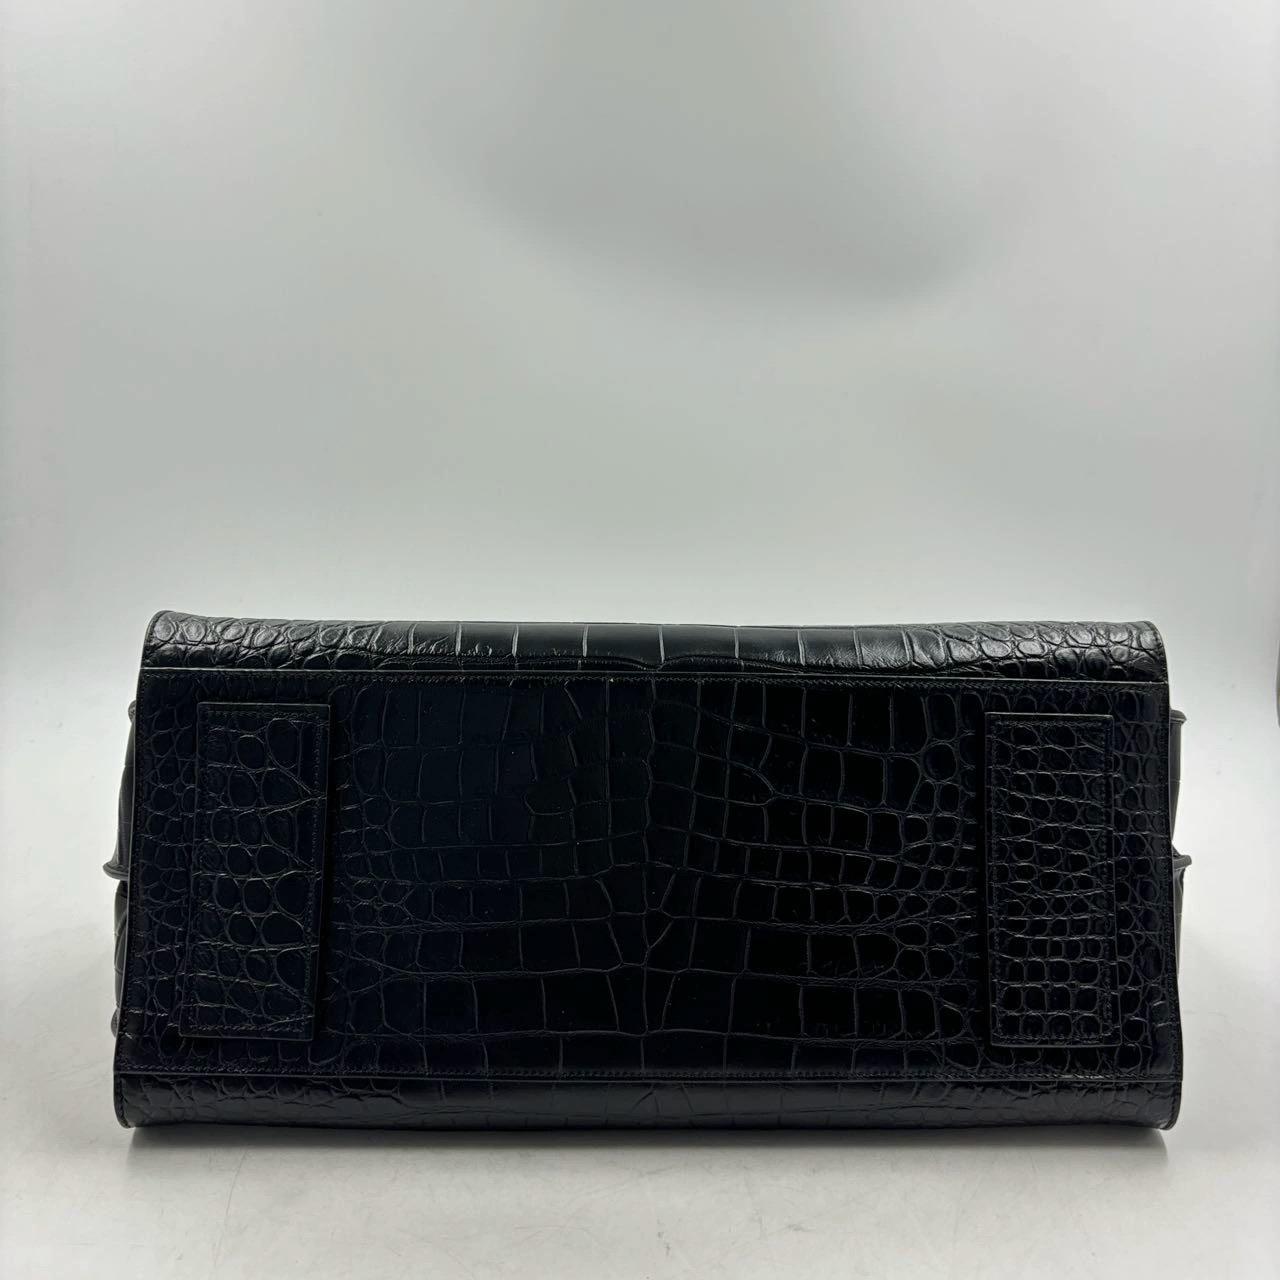 Saint Laurent Sac De Jour Large Black Crocodile-embossed Leather Handbag For Sale 1